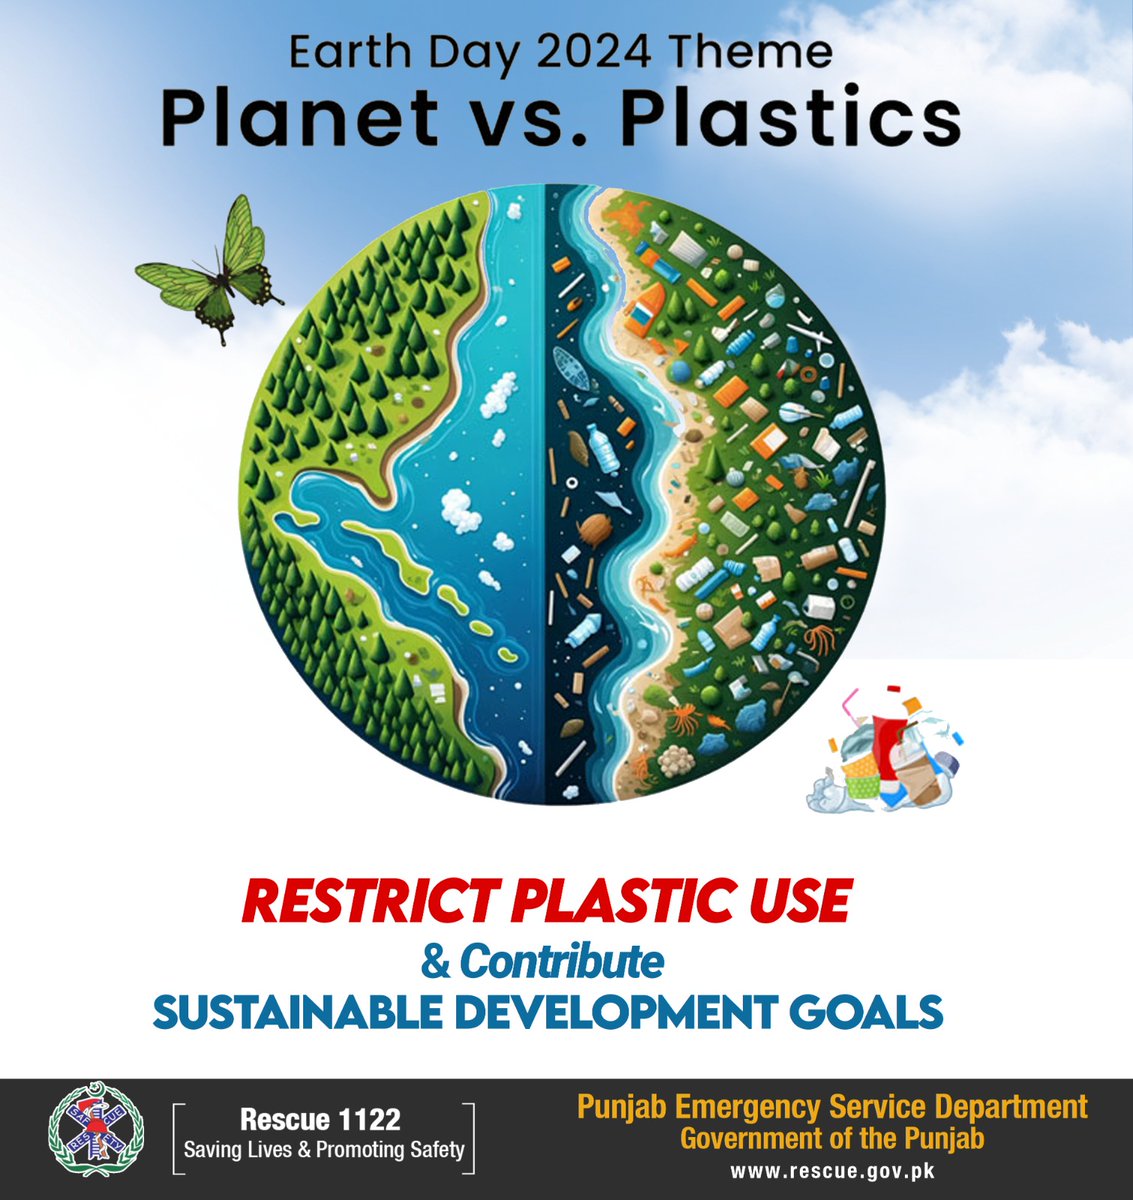 No Plastics use to save Earth @MaryamNSharif @GovtofPakistan @GovtofPunjabPK @MohsinnaqviC42 @SalmanRafiquePK @PSHDept @AzmaBokhariPMLN @ietuk1 @SHCMEHealth @ExpressNewsPK @geonews_urdu @pesrescue1122 @TurkiyeUrdu_